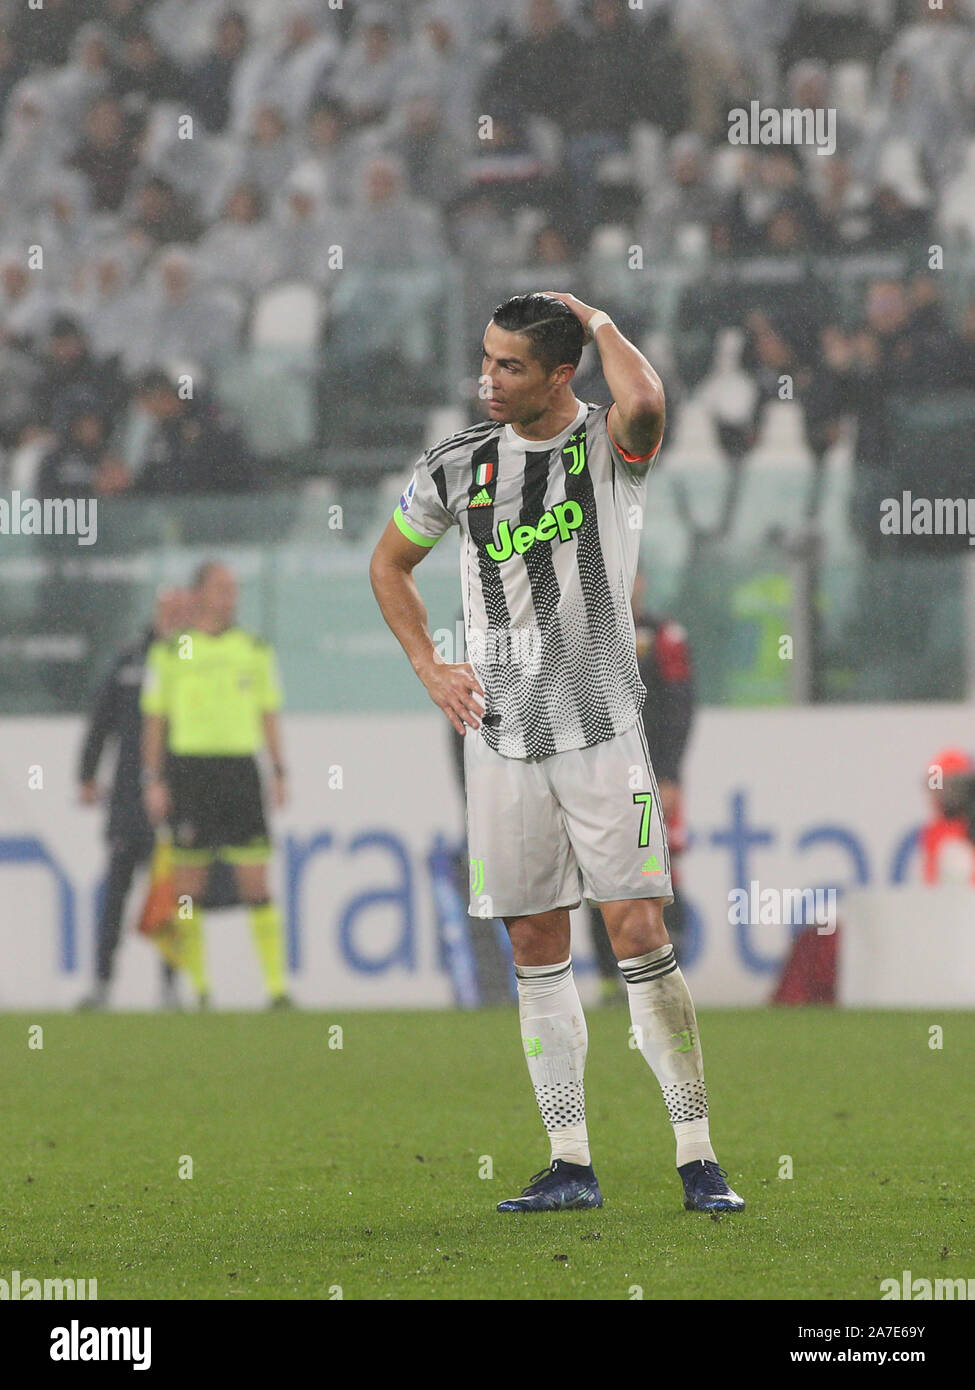 7 cristiano ronaldo (juventus) during Juventus vs Genoa, Torino, Italy, 30 Oct 2019, Soccer Italian Soccer Serie A Men Championship Stock Photo